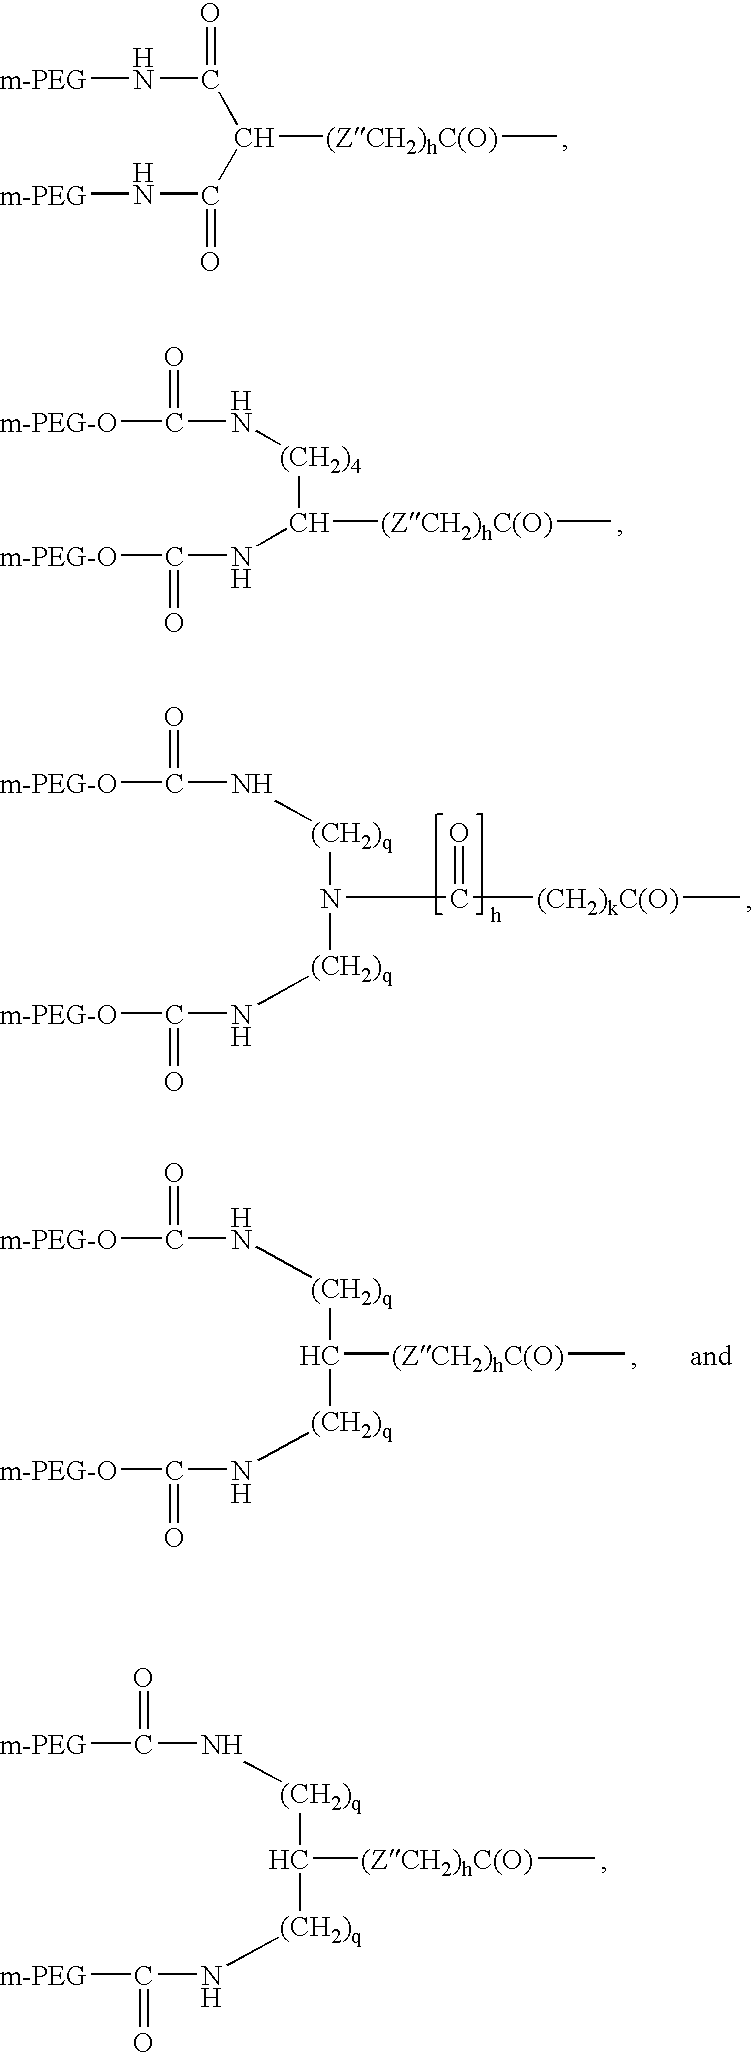 Method of preparing polymers having terminal amine groups